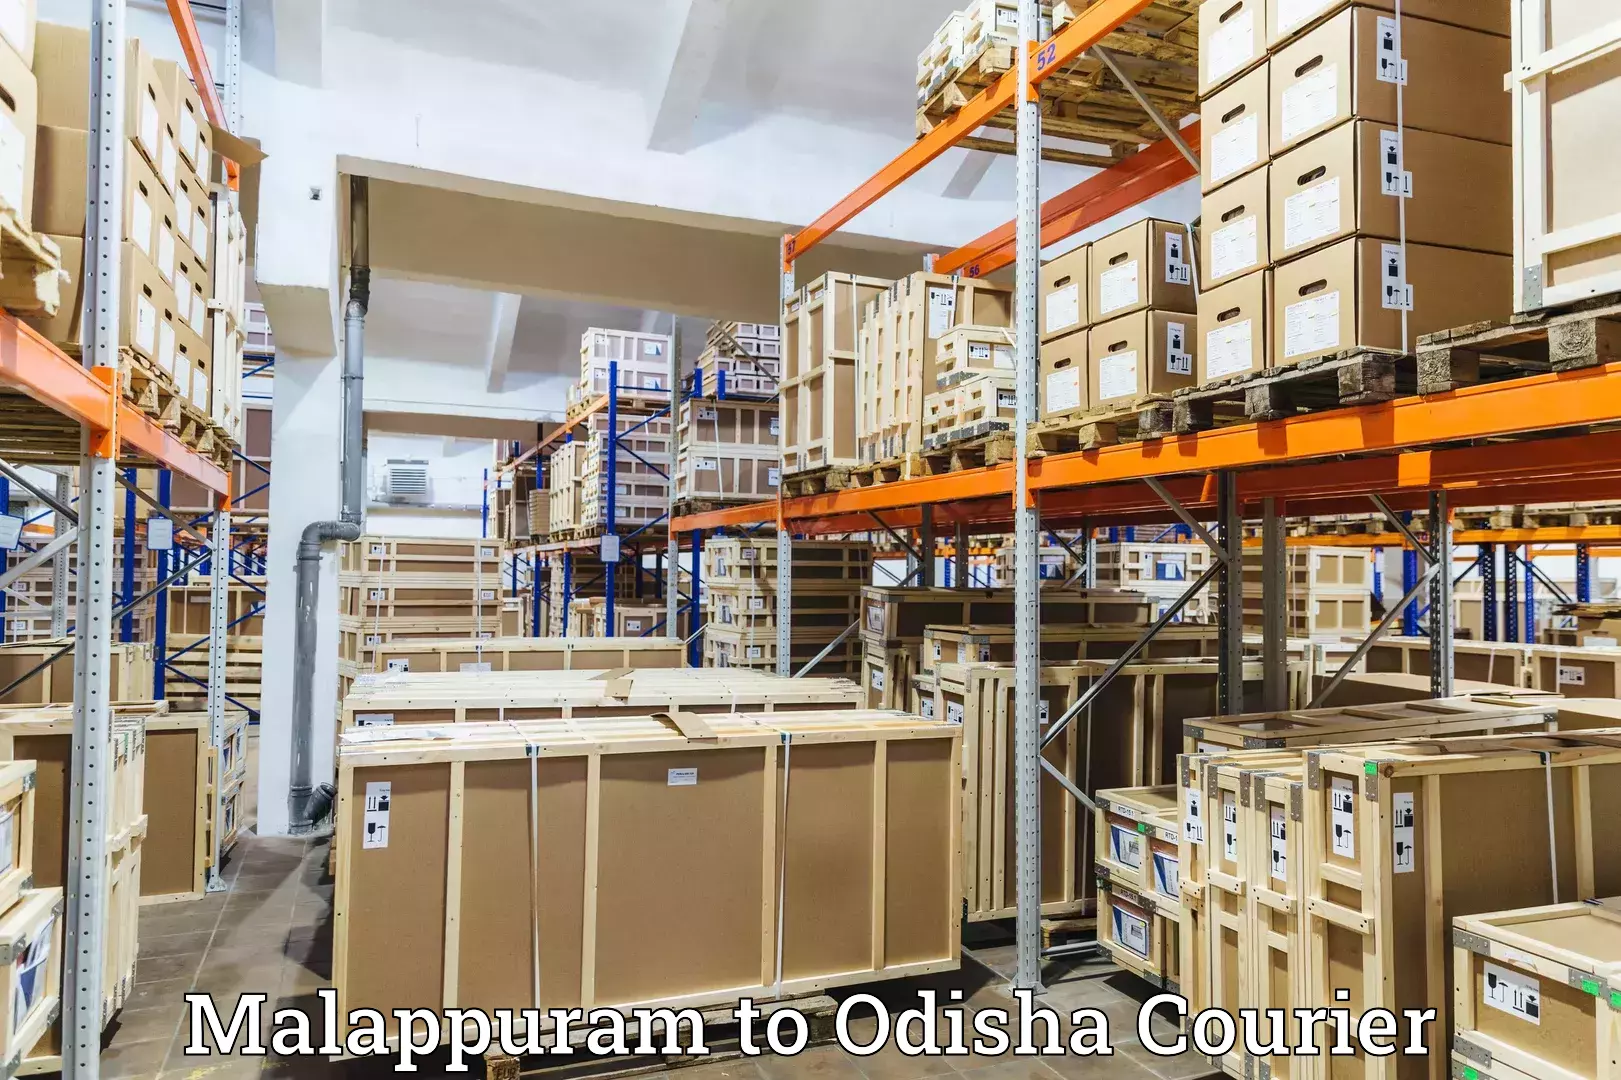 Courier rate comparison in Malappuram to Sambalpur